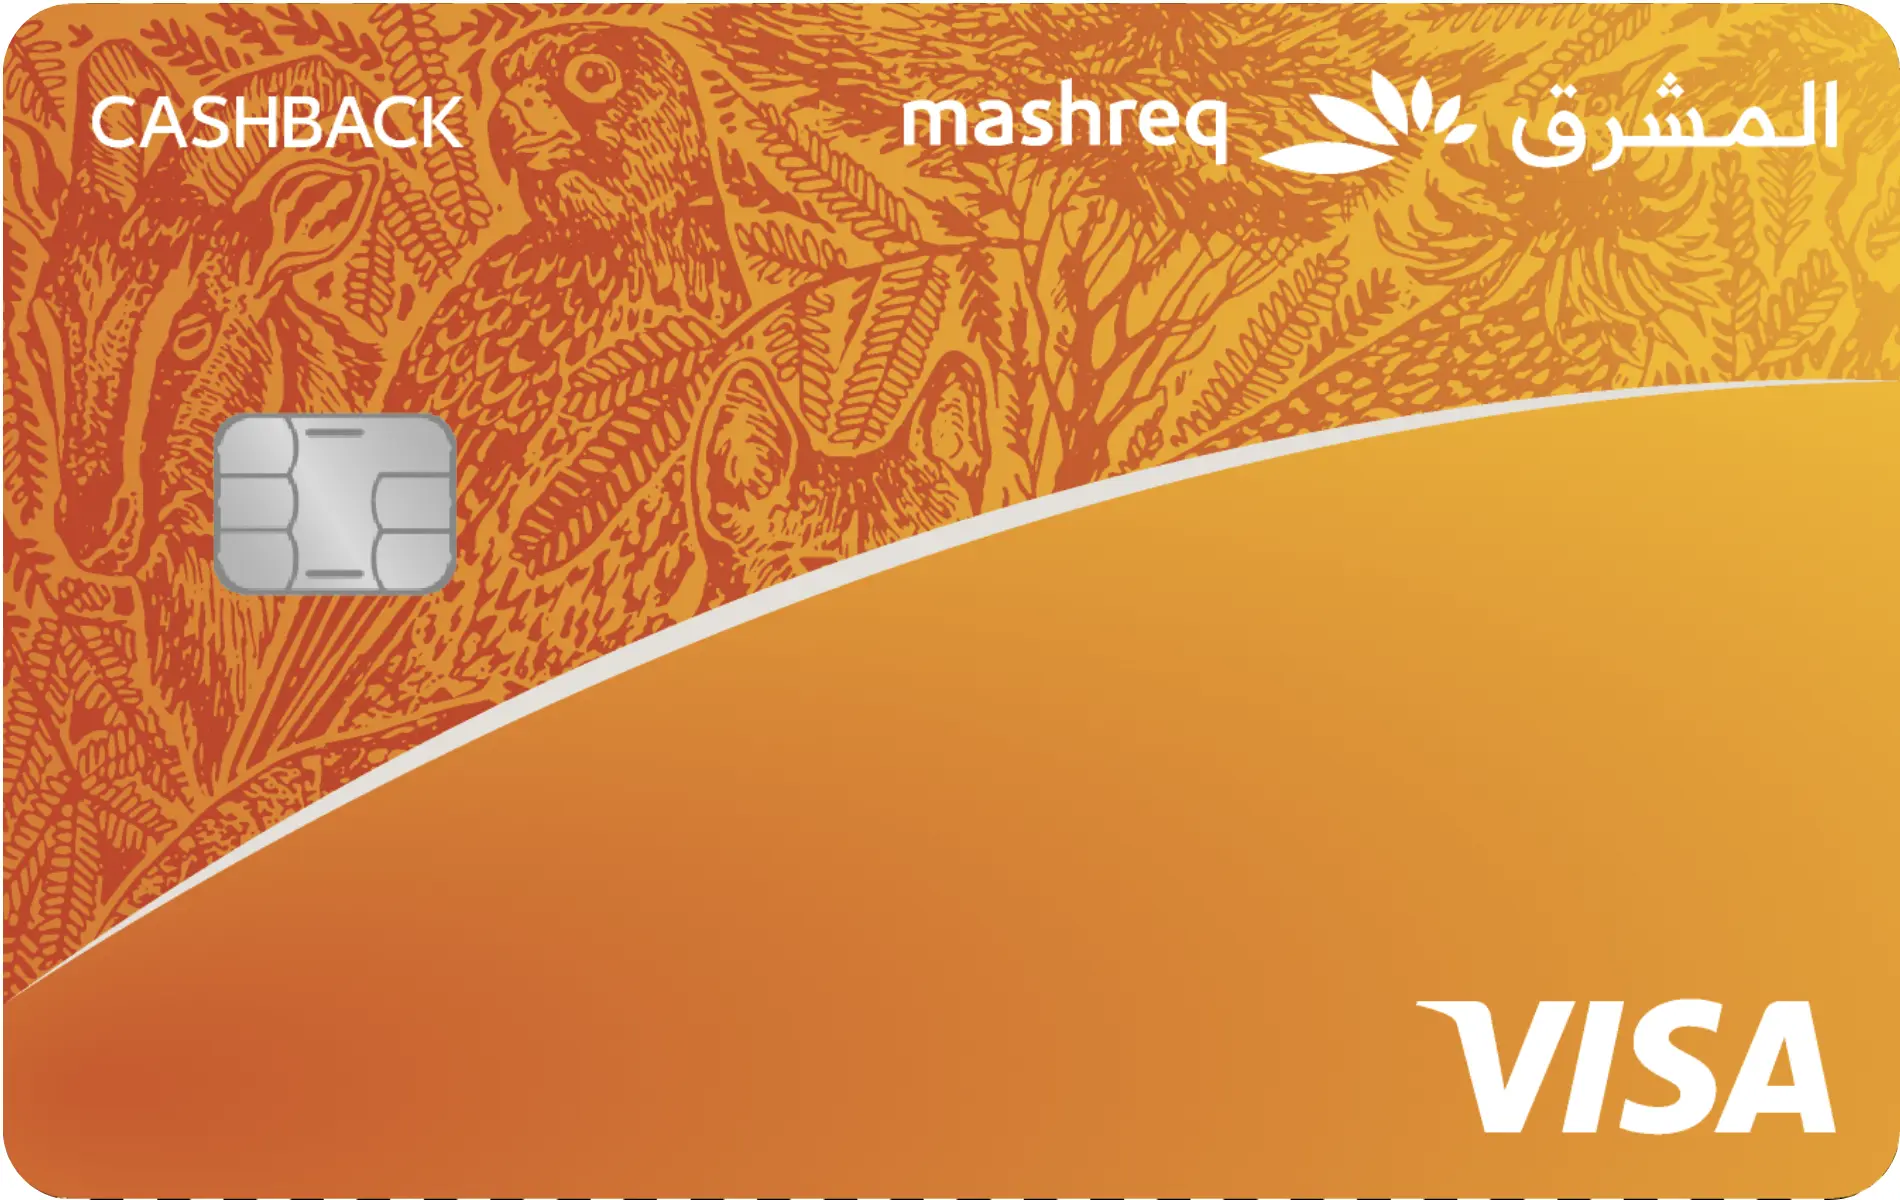 mashreq cashback card